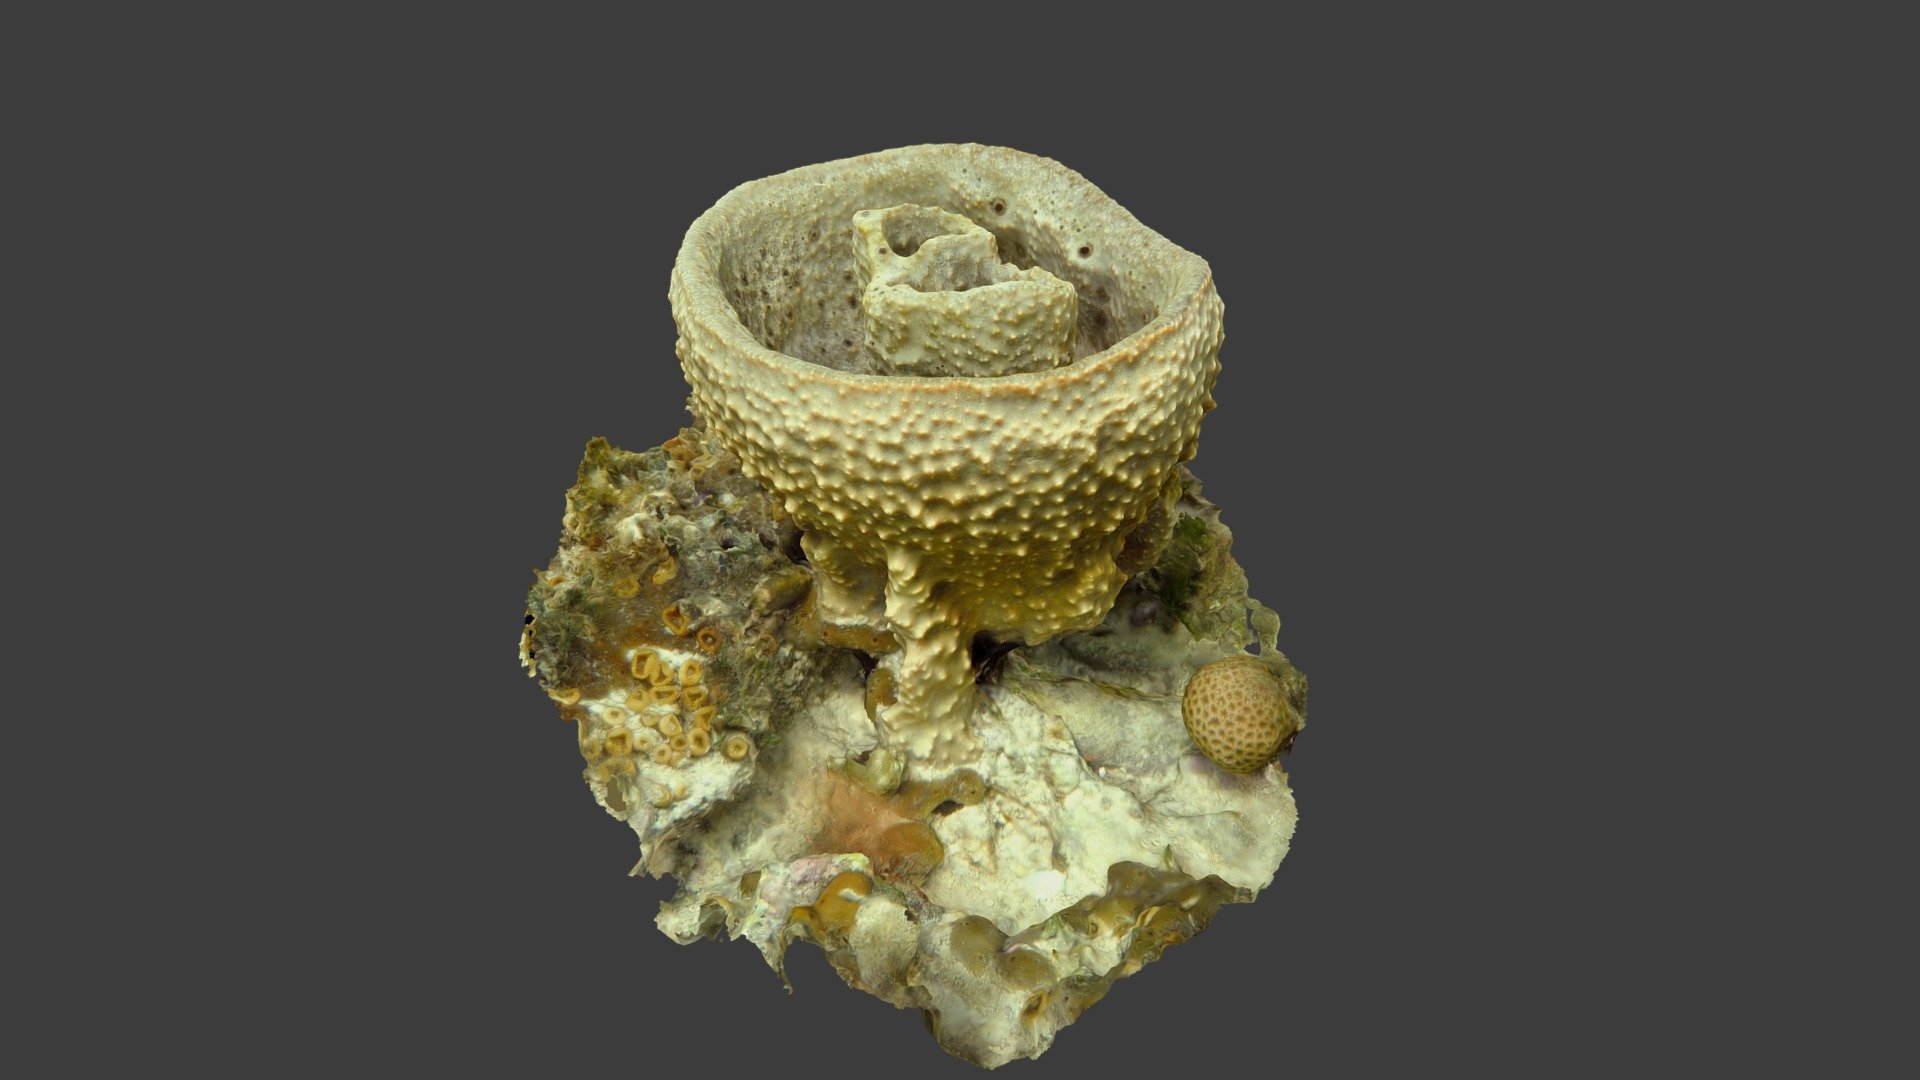 Bell or Vase Sponge (Ircinia campana)